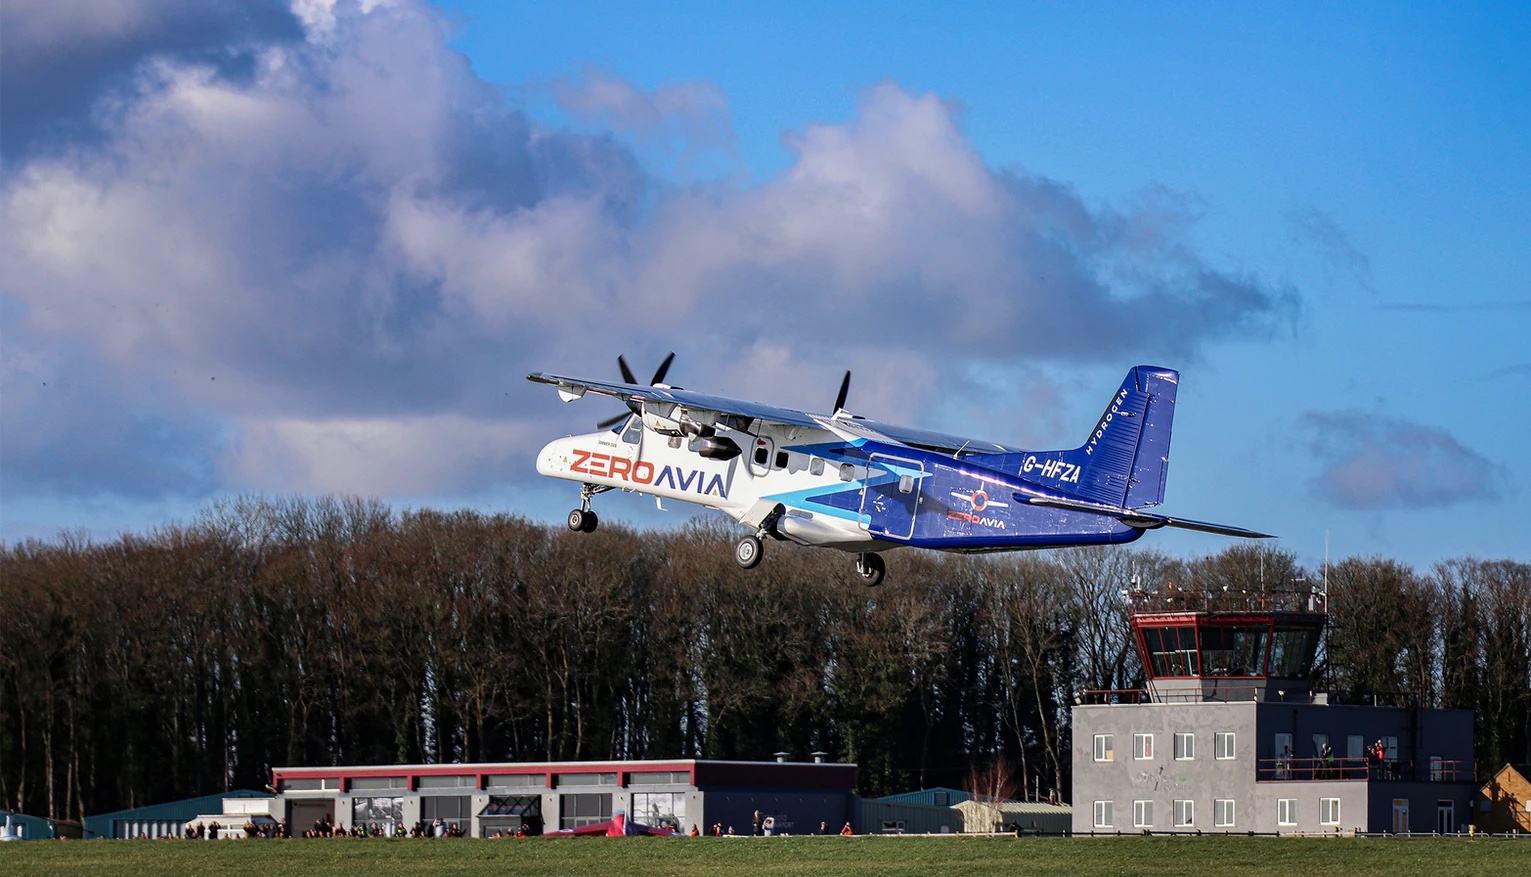 ZeroAvia Dornier 228 at Cotswold's airport taking off